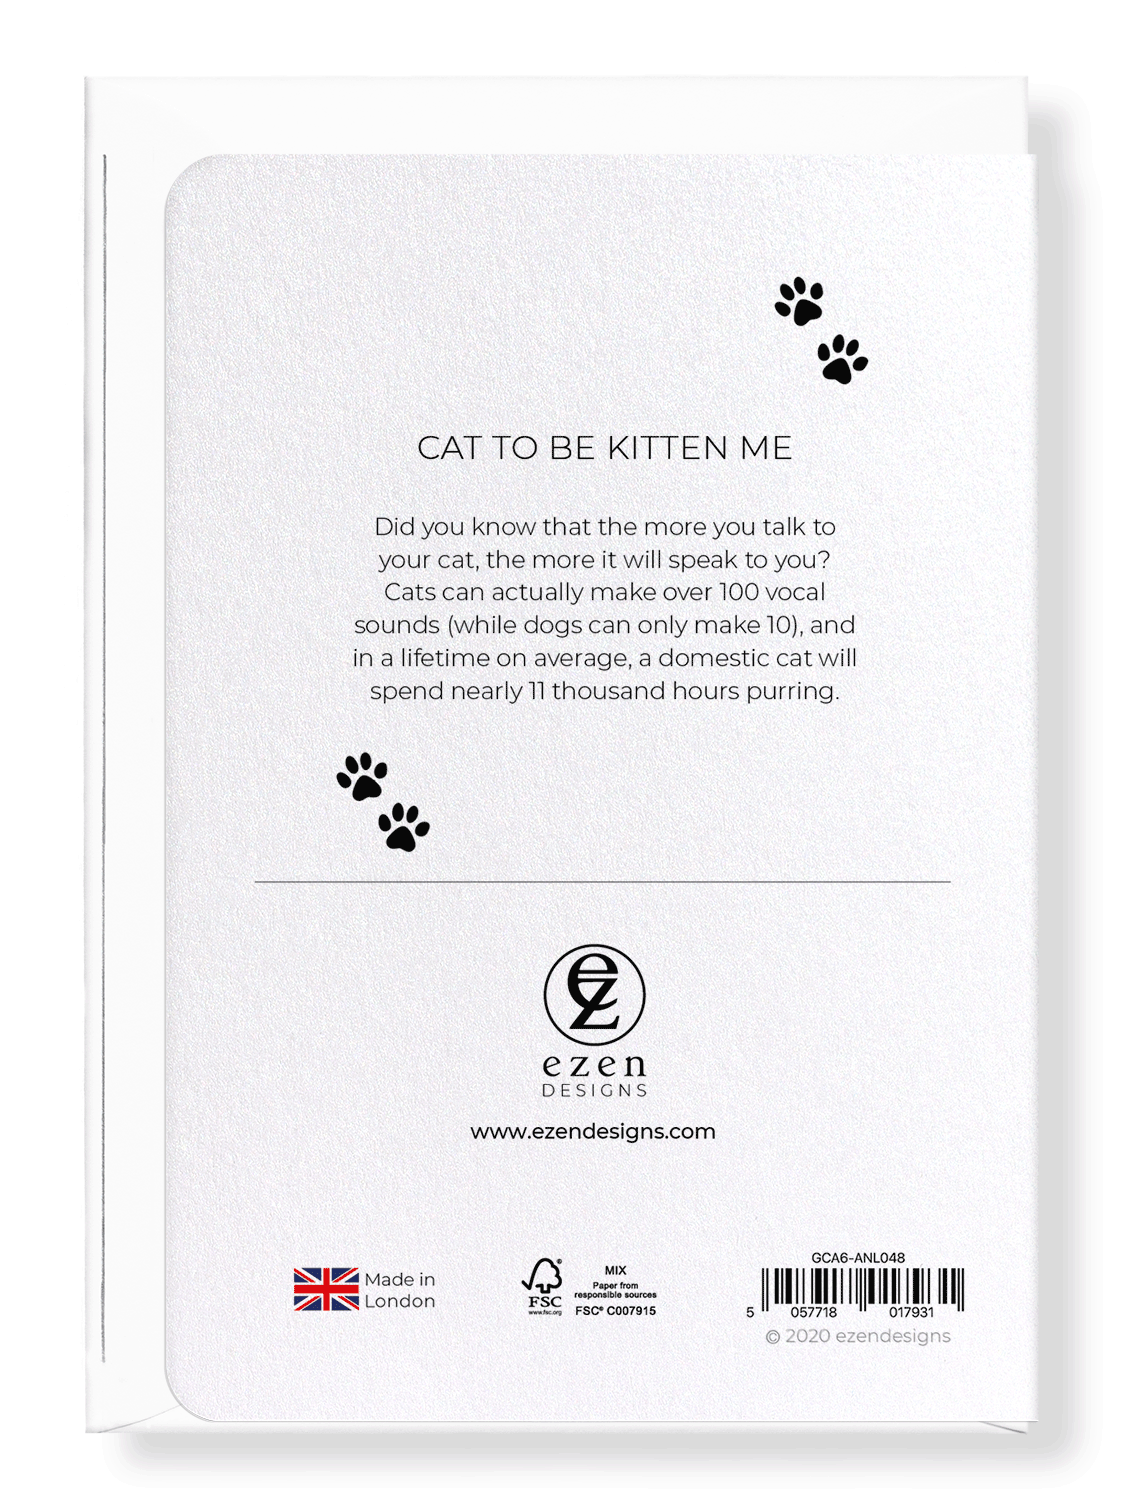 Ezen Designs - Cat to be kitten me - Greeting Card - Back